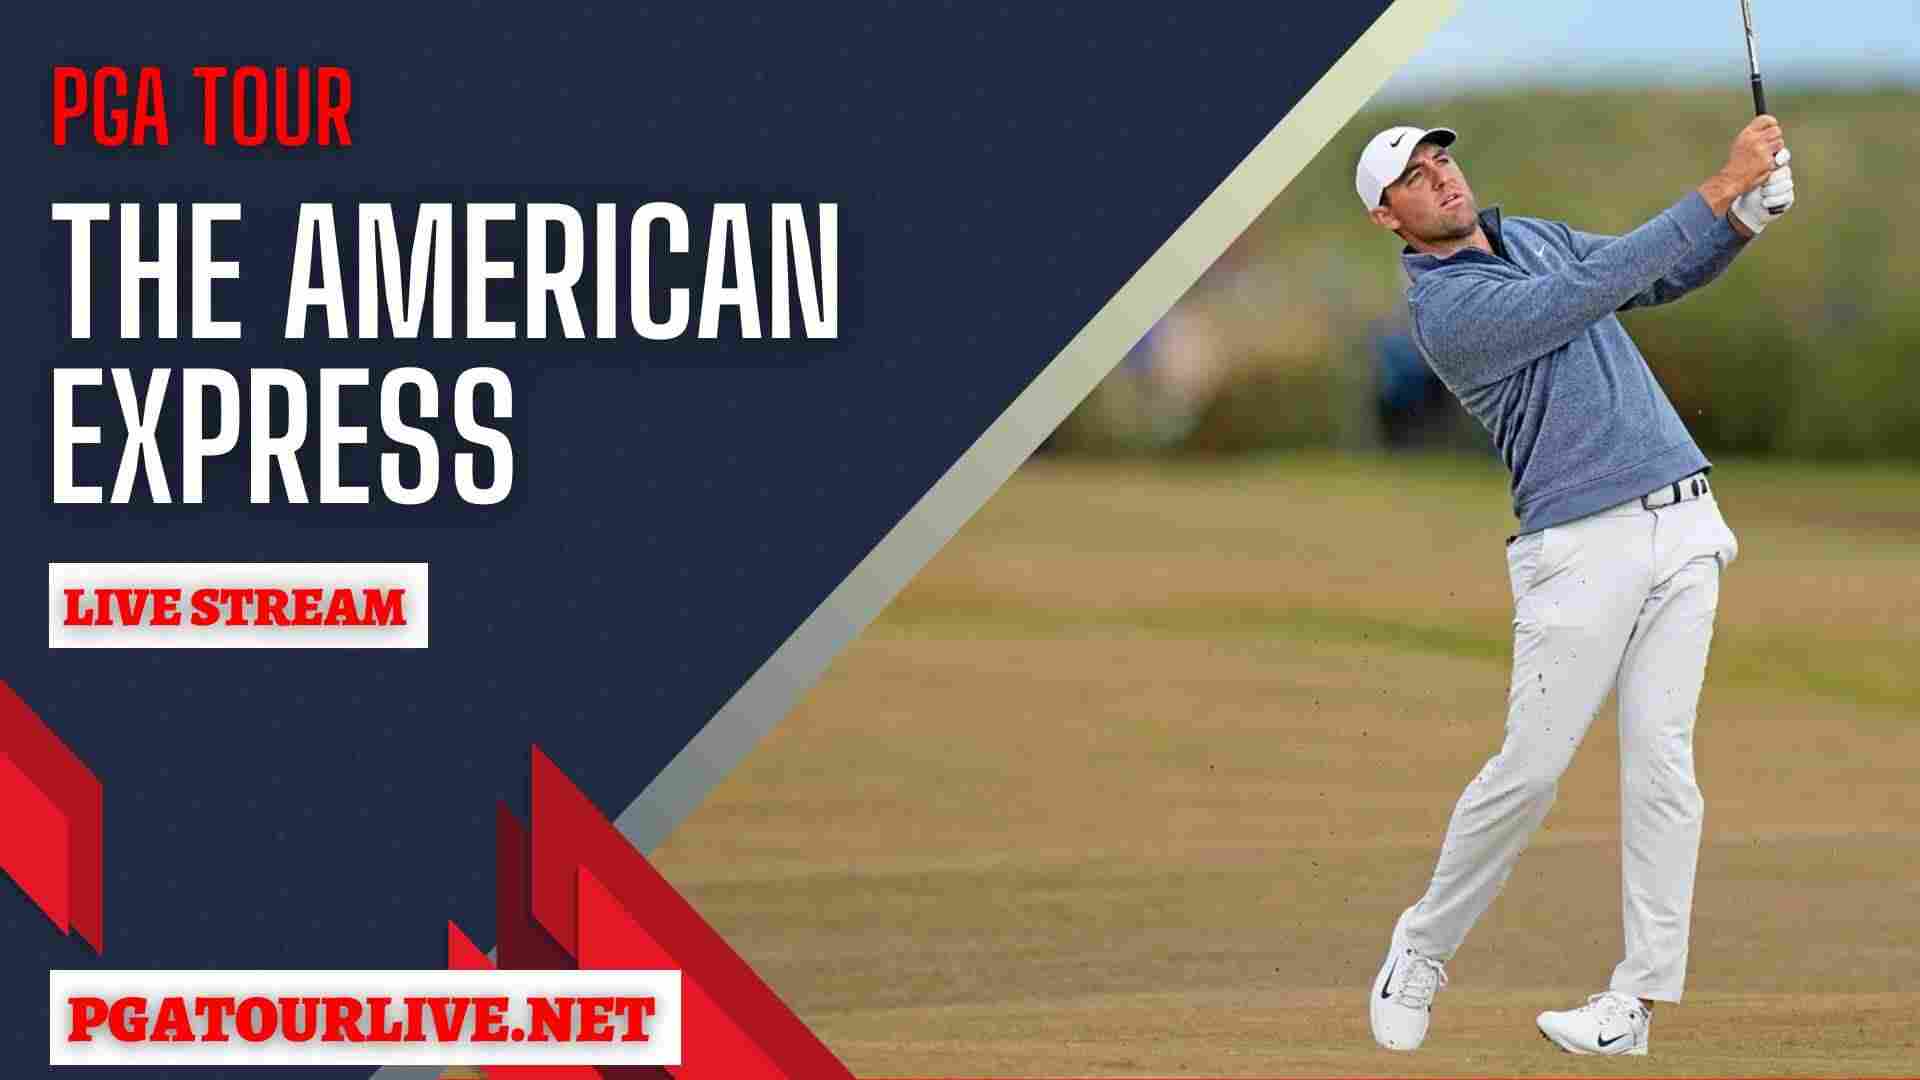 The American Express Golf Live Stream PGA Tour